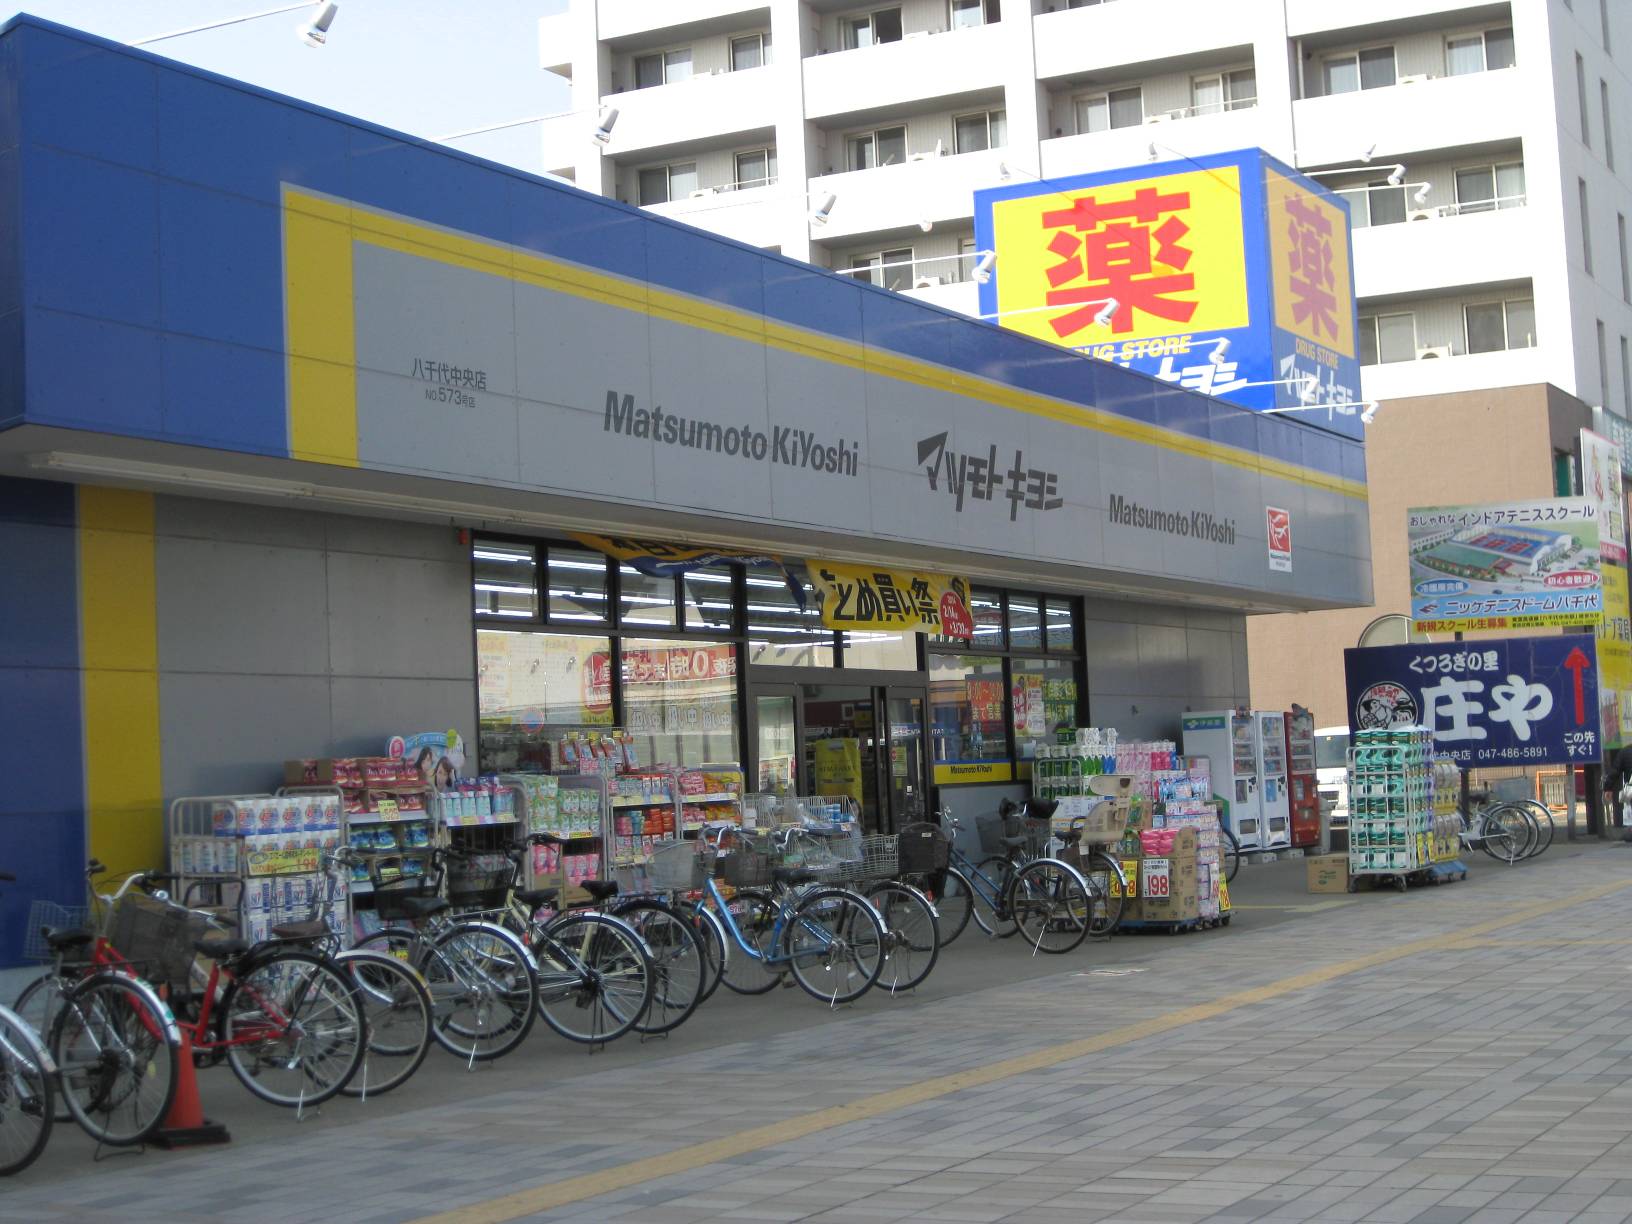 Dorakkusutoa. Drugstore Matsumotokiyoshi Yachiyo Chuo 1296m until (drugstore)